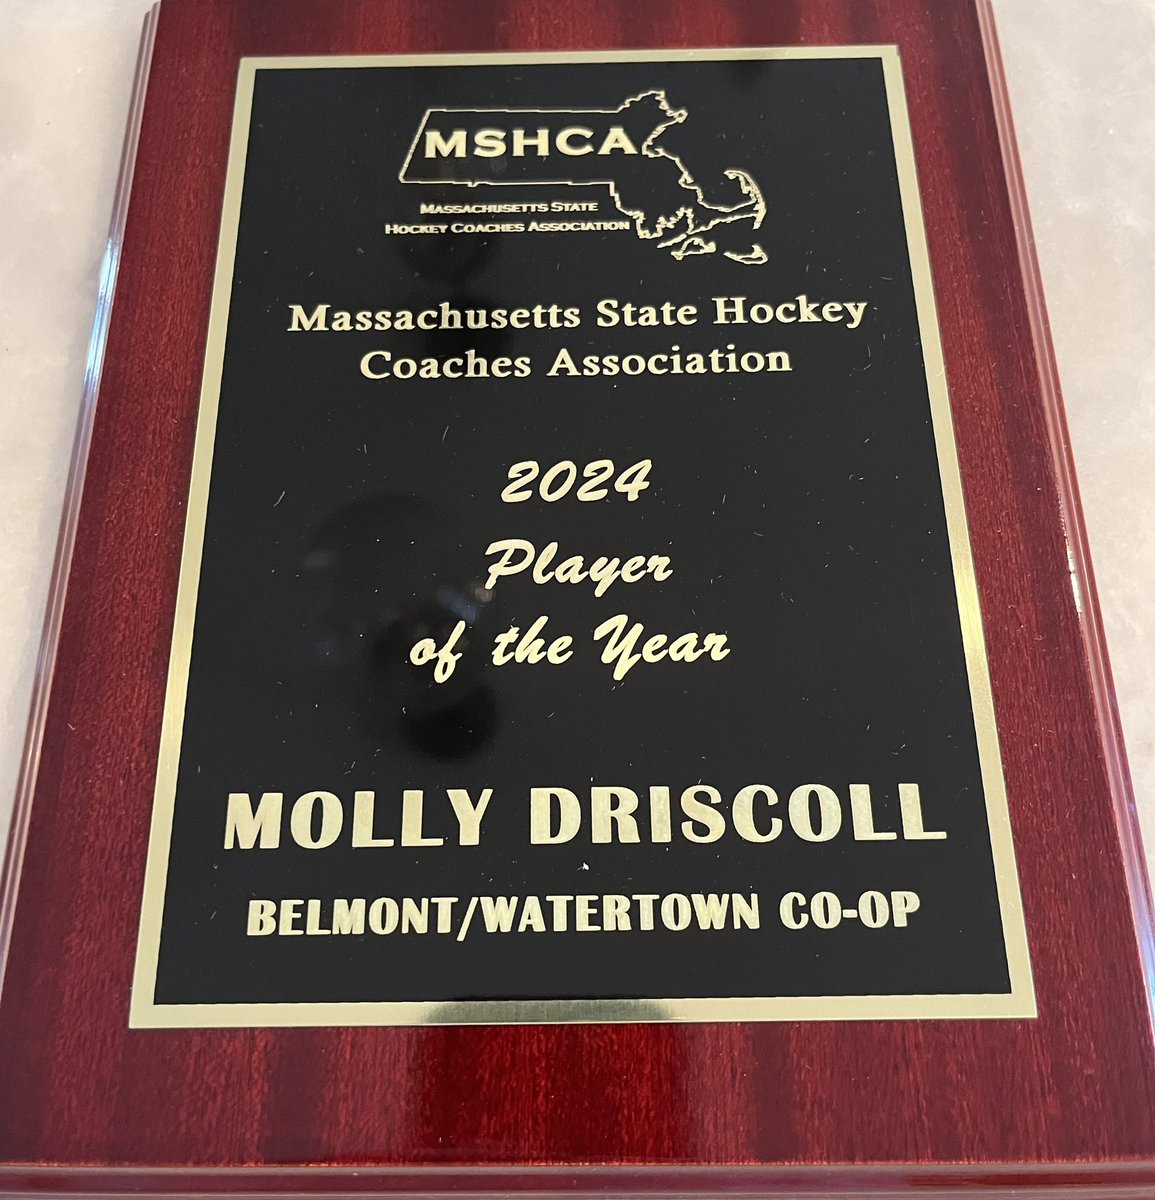 Belmont/Watertown’s Molly Driscoll has been named the Massachusetts hockey coaches association girl’s player of the year! Congratulations, Molly! @WatertownMANews @BKelleher2415 @MSHCA1 @BGlobeSports @BosHeraldSports @MassHSHockey @MHLbbiglive @bhsmarauders